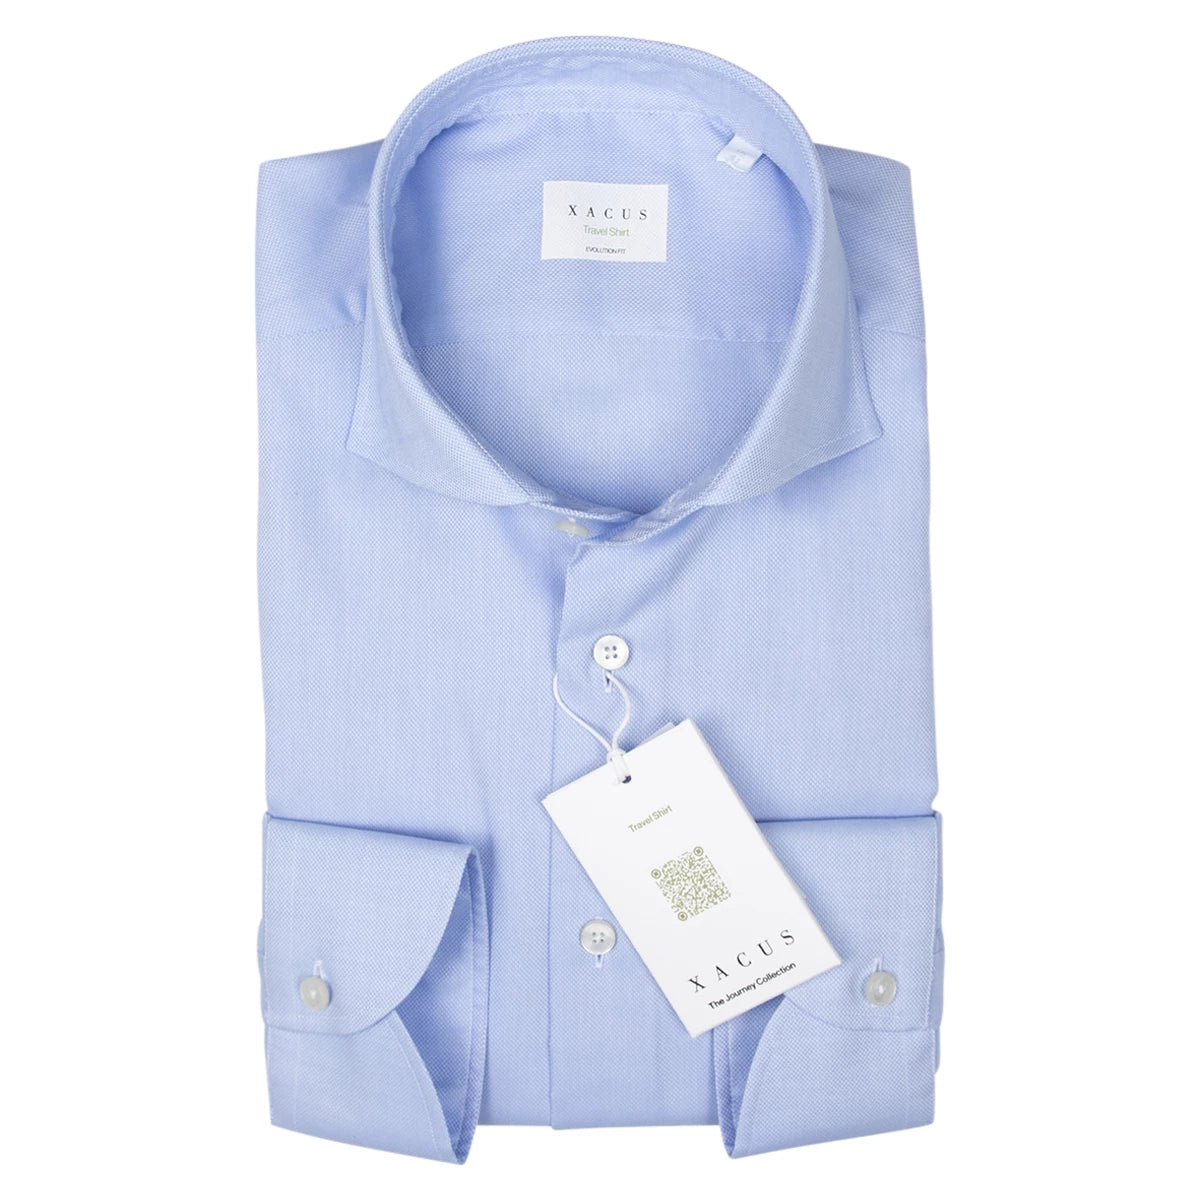 Xacus overhemd lichtblauw | tailor fit